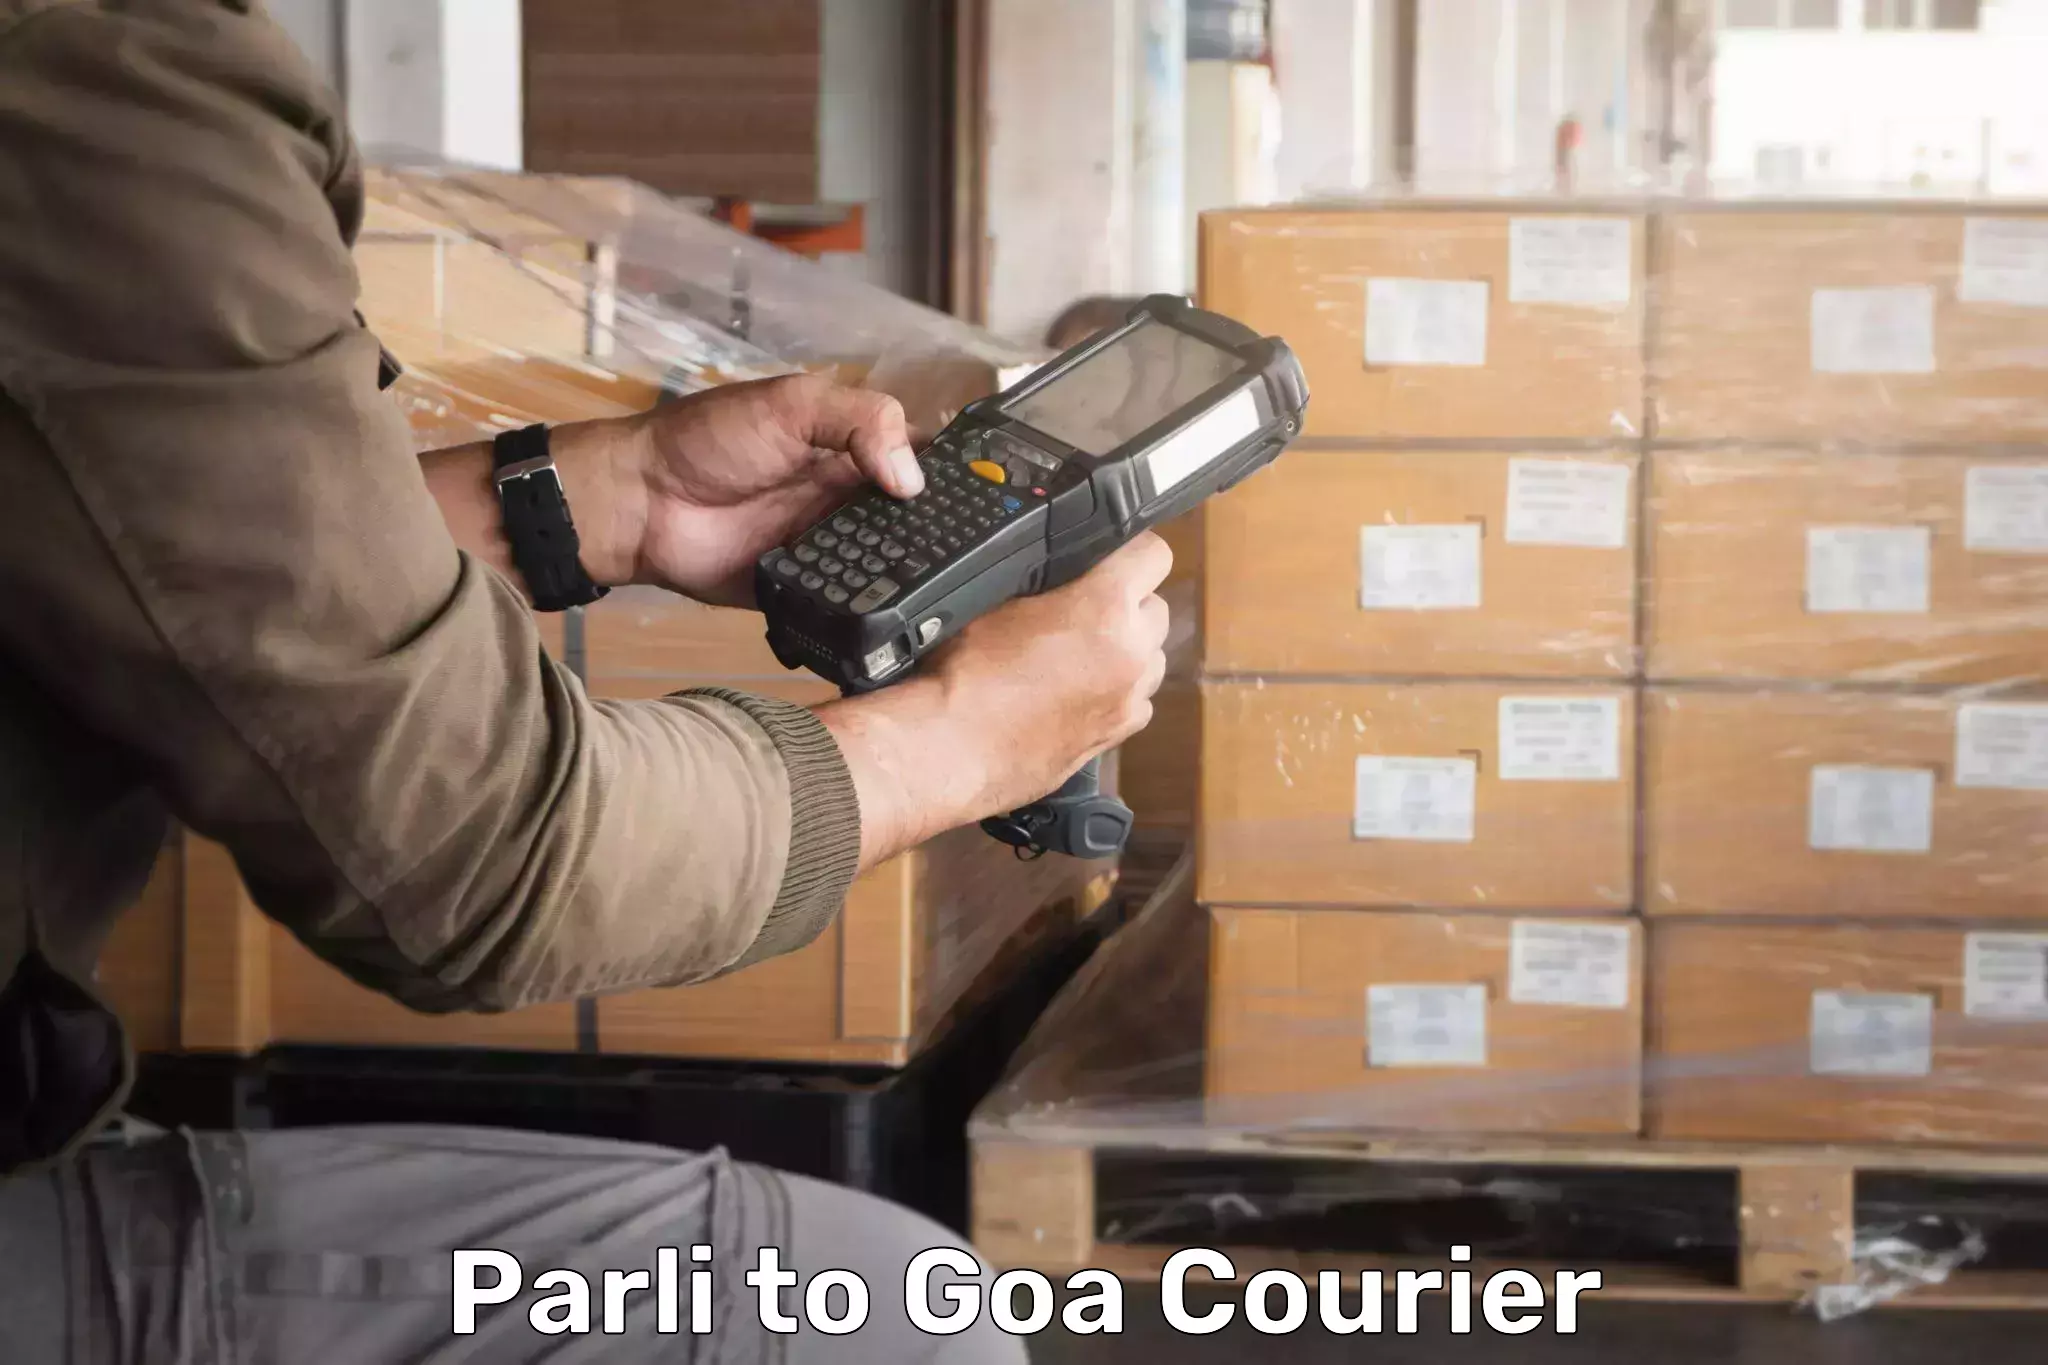 Doorstep delivery service Parli to Goa